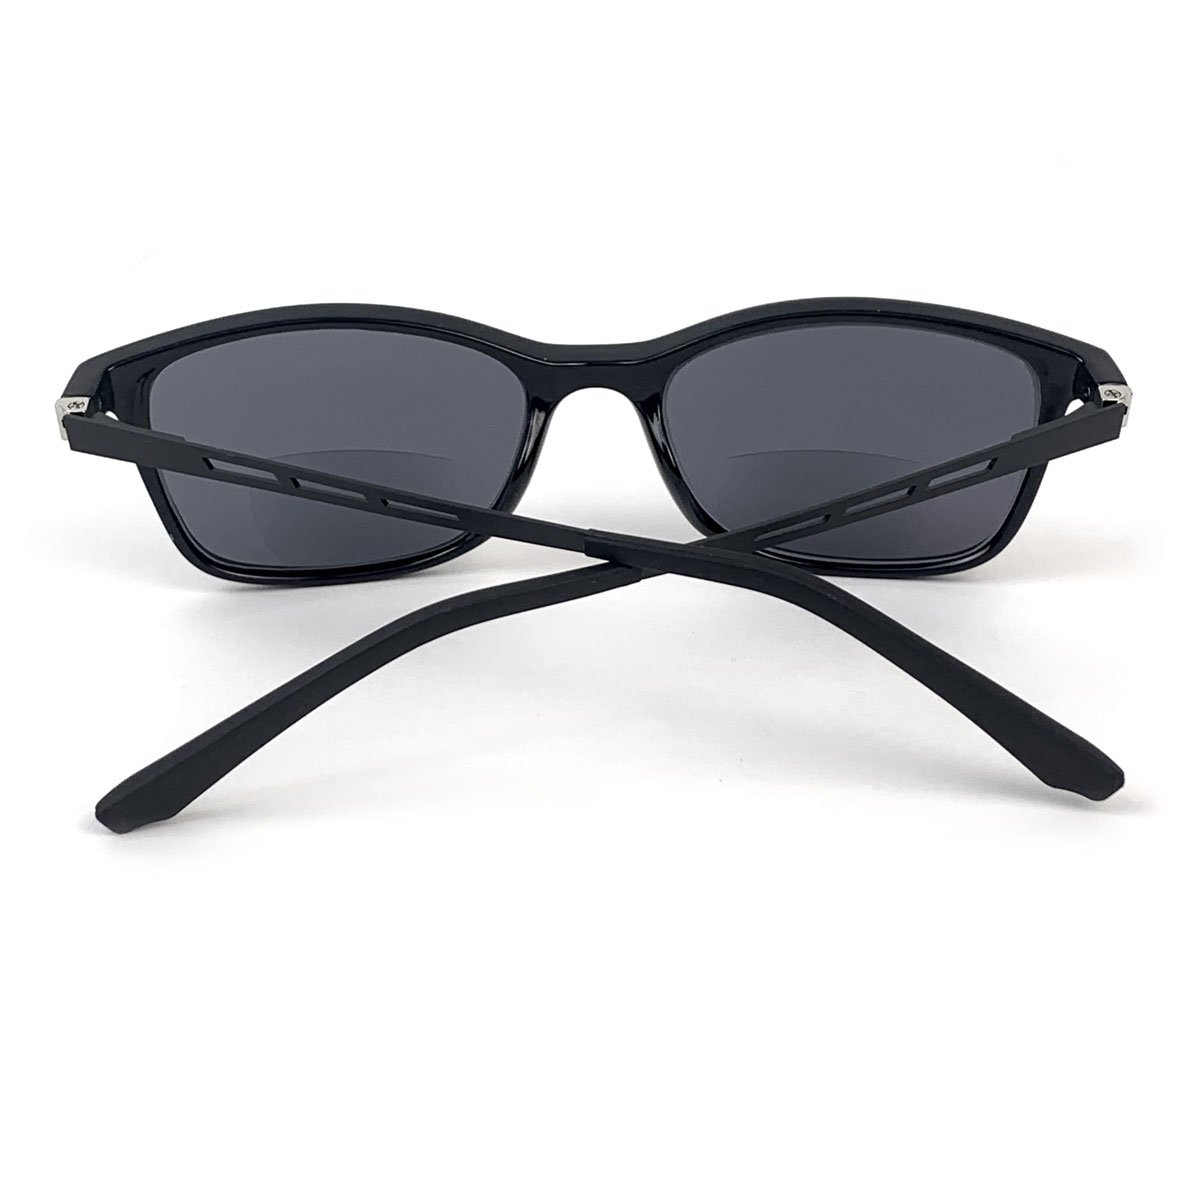 Bifocal Sun Readers Classic Frame Geek Retro Style Reading Sunglasses - Black, +2.75